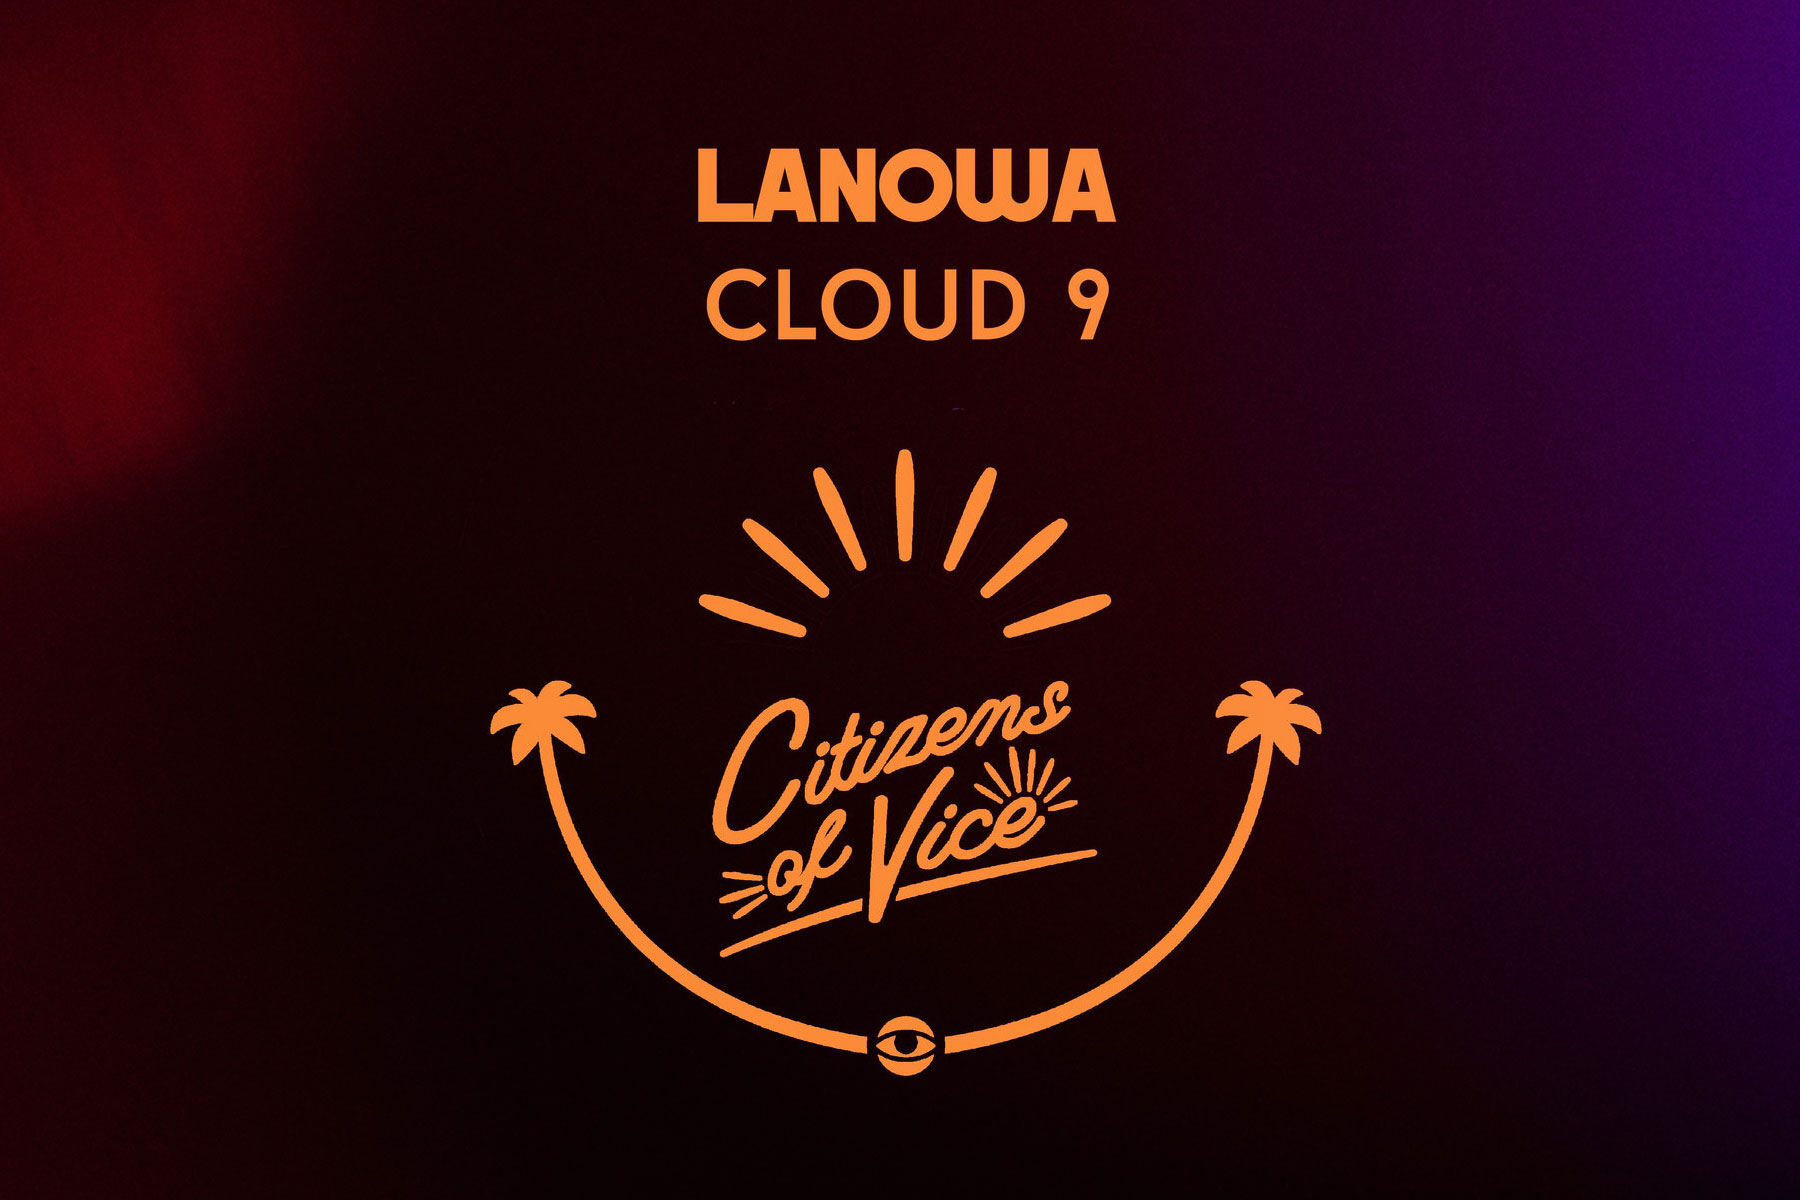 Lanowa Cloud 9 album art